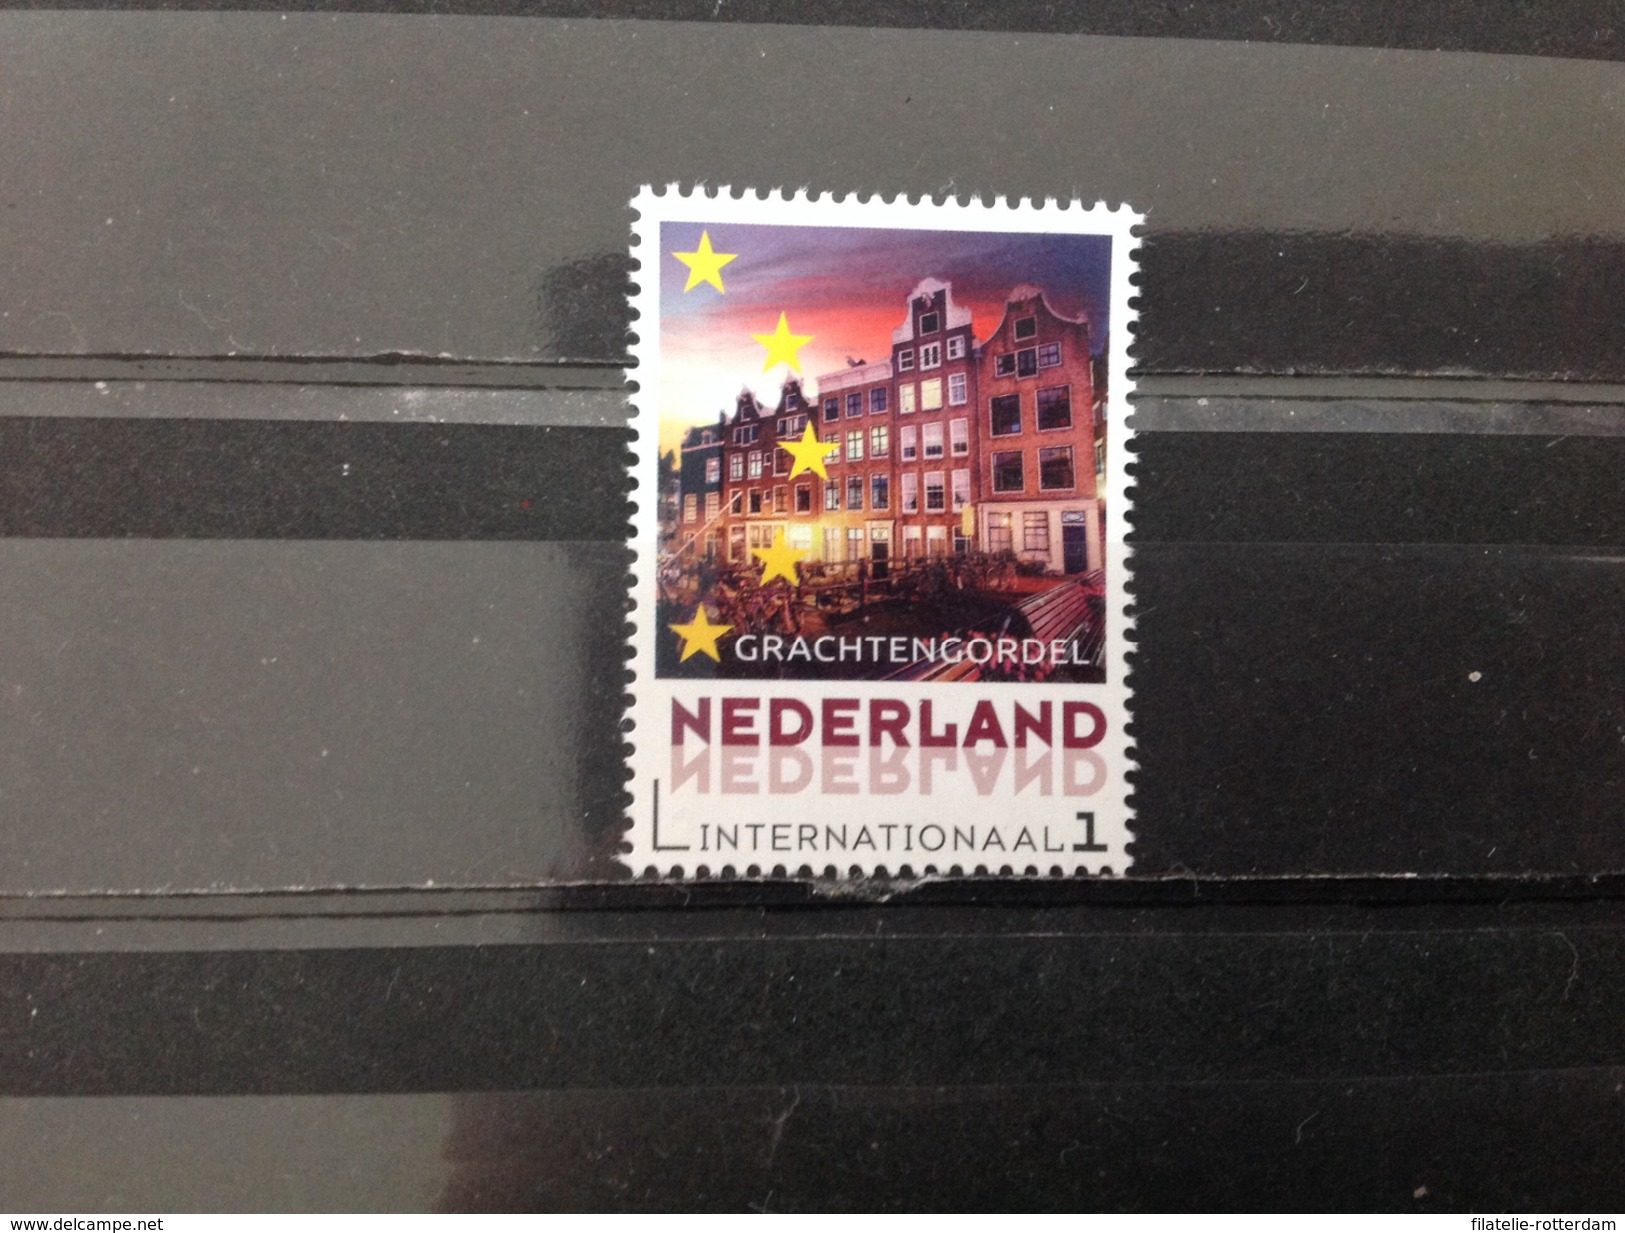 Nederland / The Netherlands - Postfris / MNH - Europazegel Amsterdam, De Grachtengordel 2016 Very Rare! - Ongebruikt